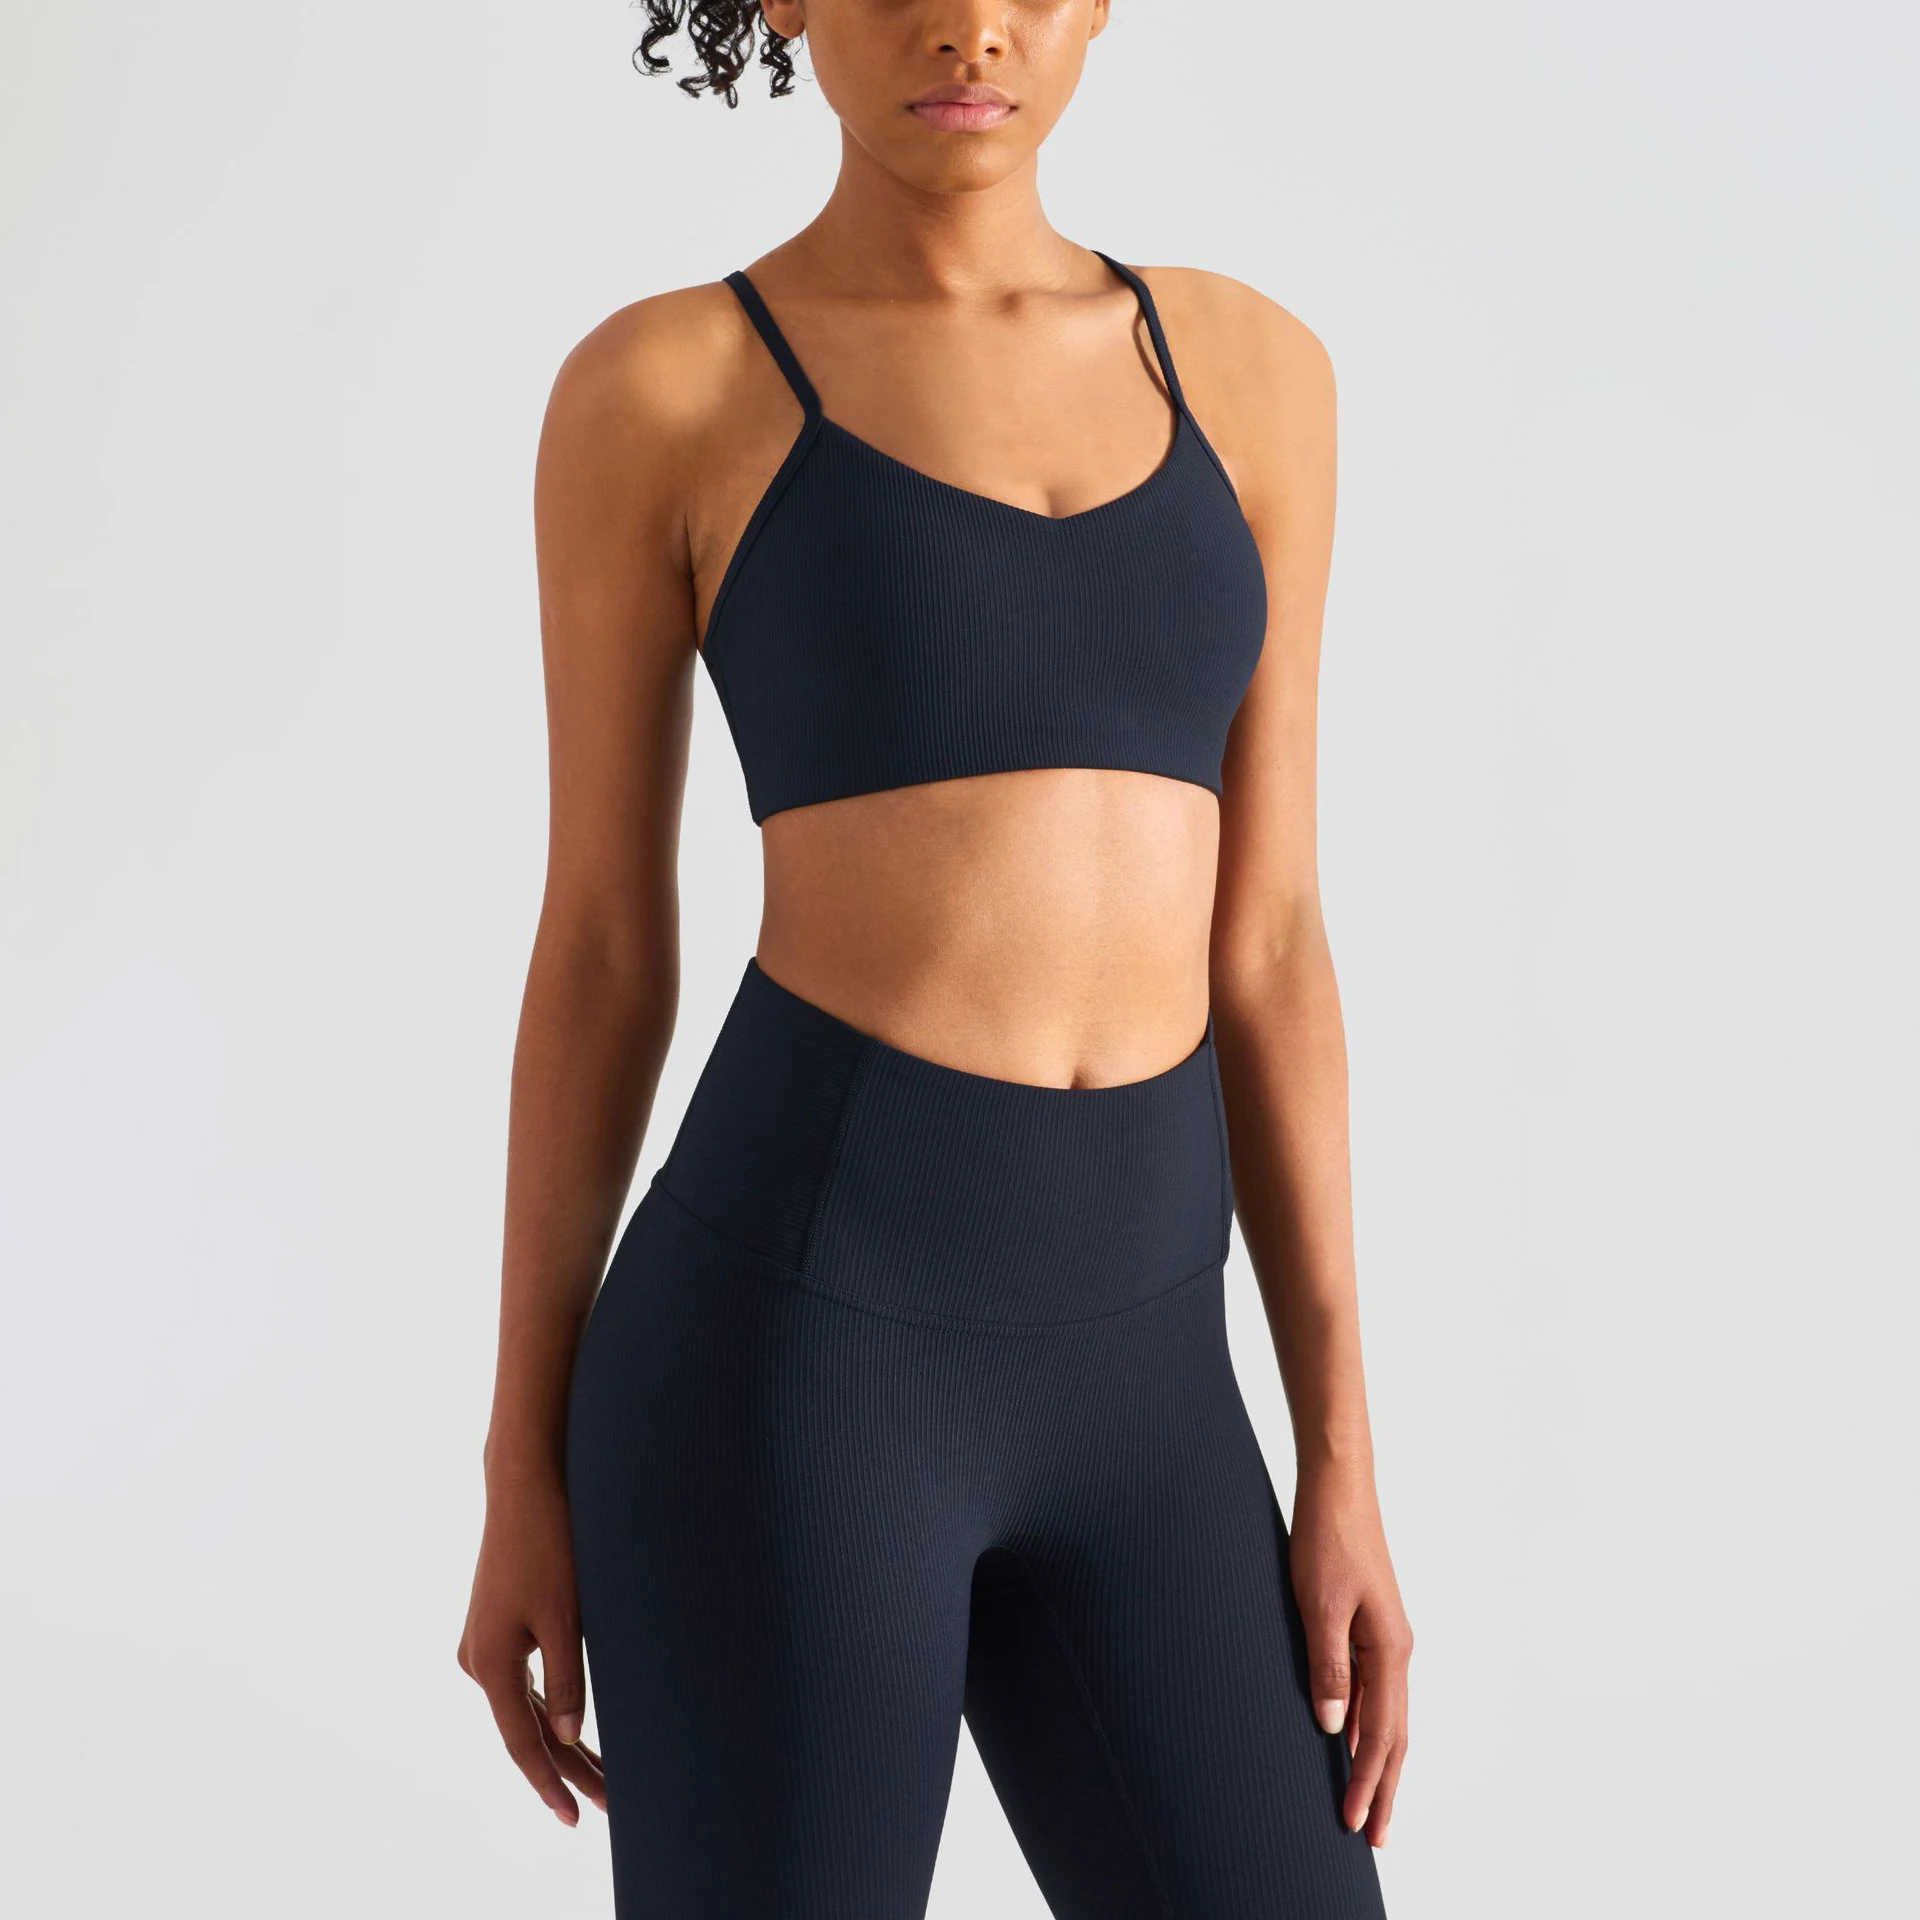 INS Hot Sale V Neck High Impact Shockproof Workout Bras Women Cross Beauty Back Yoga Tops High Elastic Ribbed Sports Bras